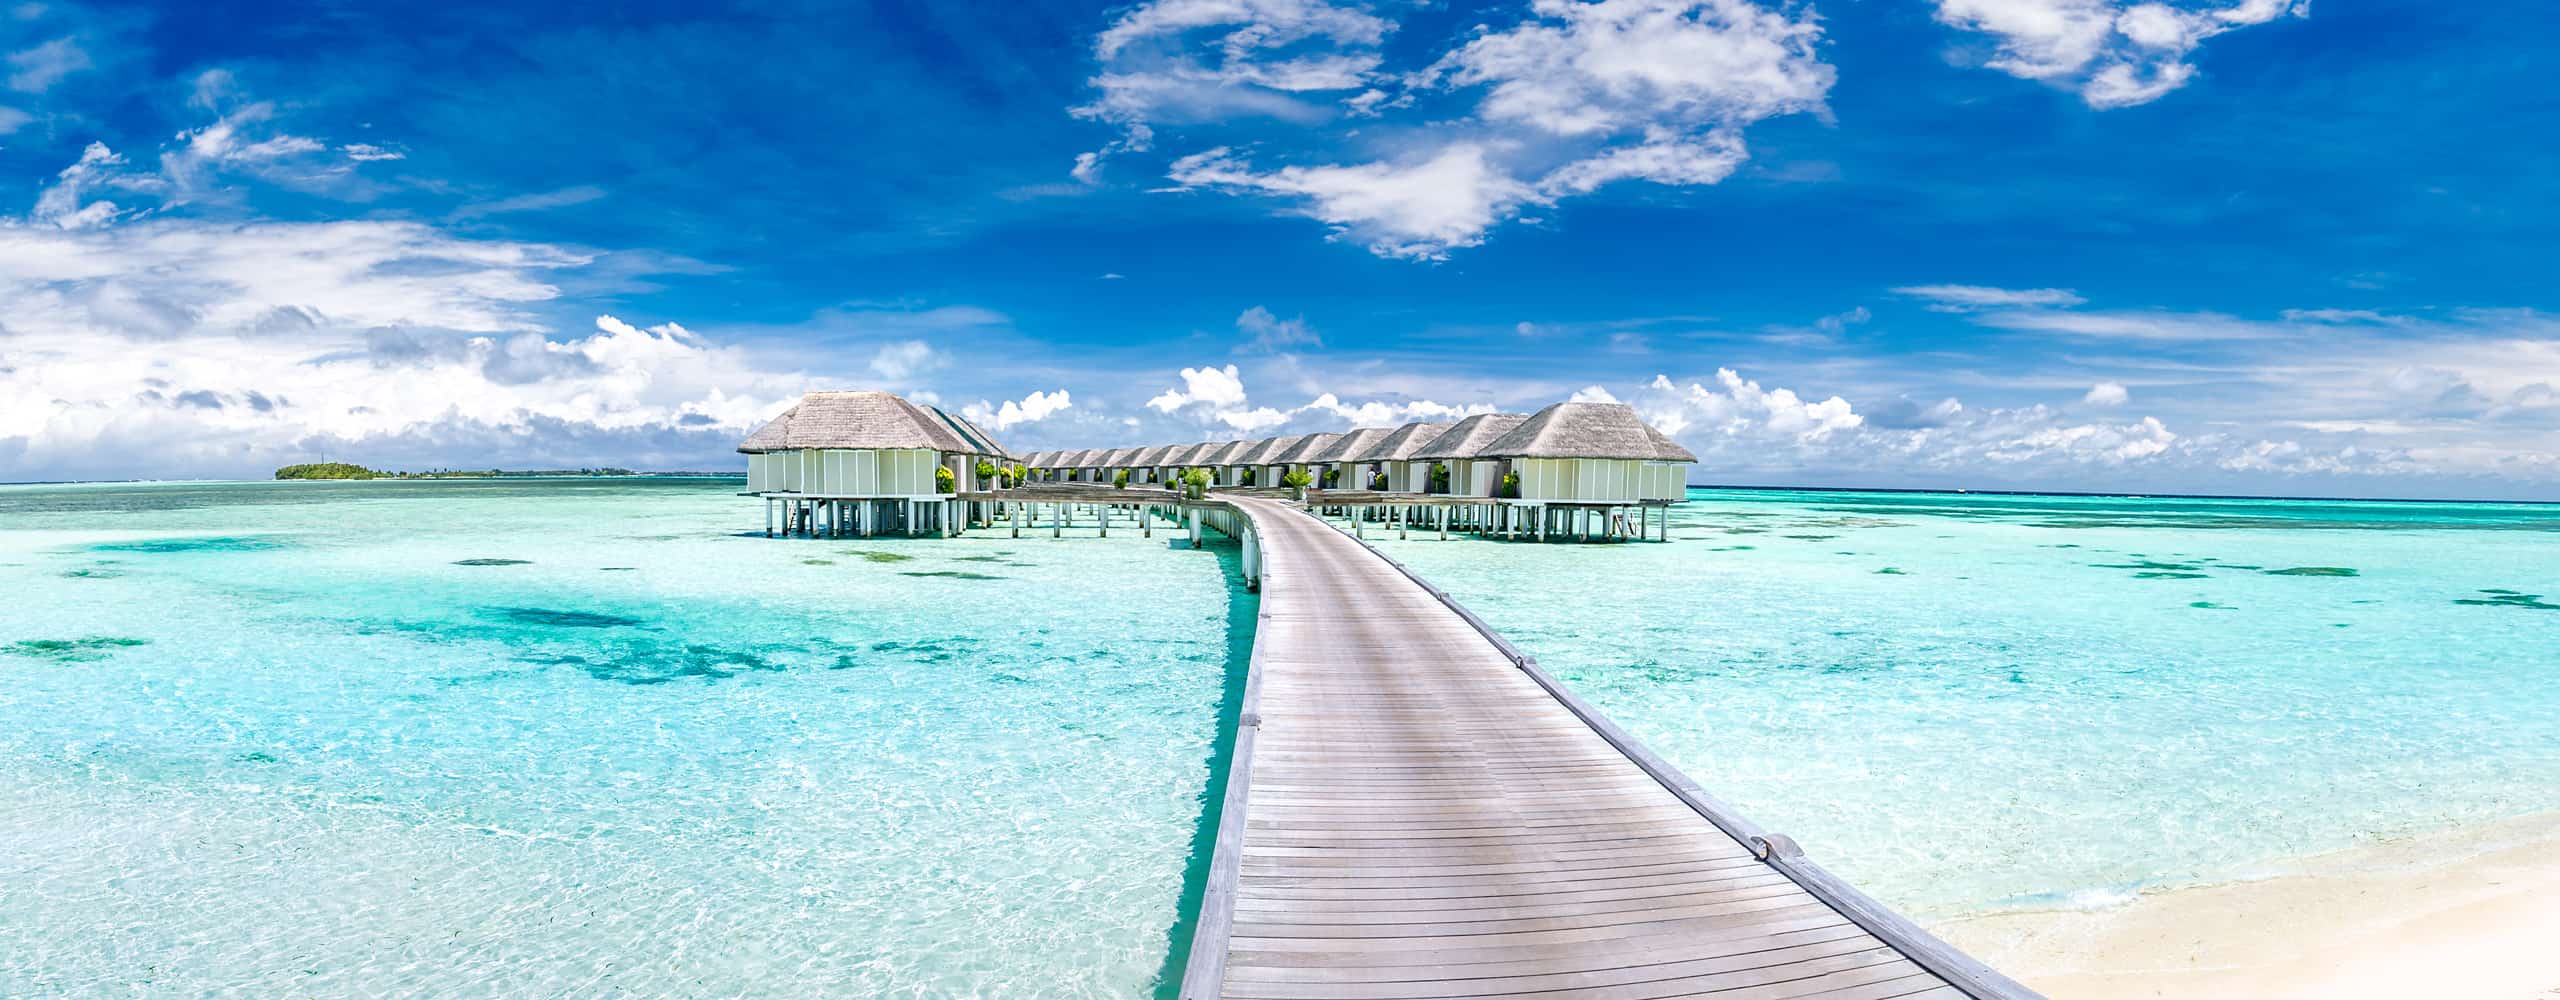 Maldives, South Asia